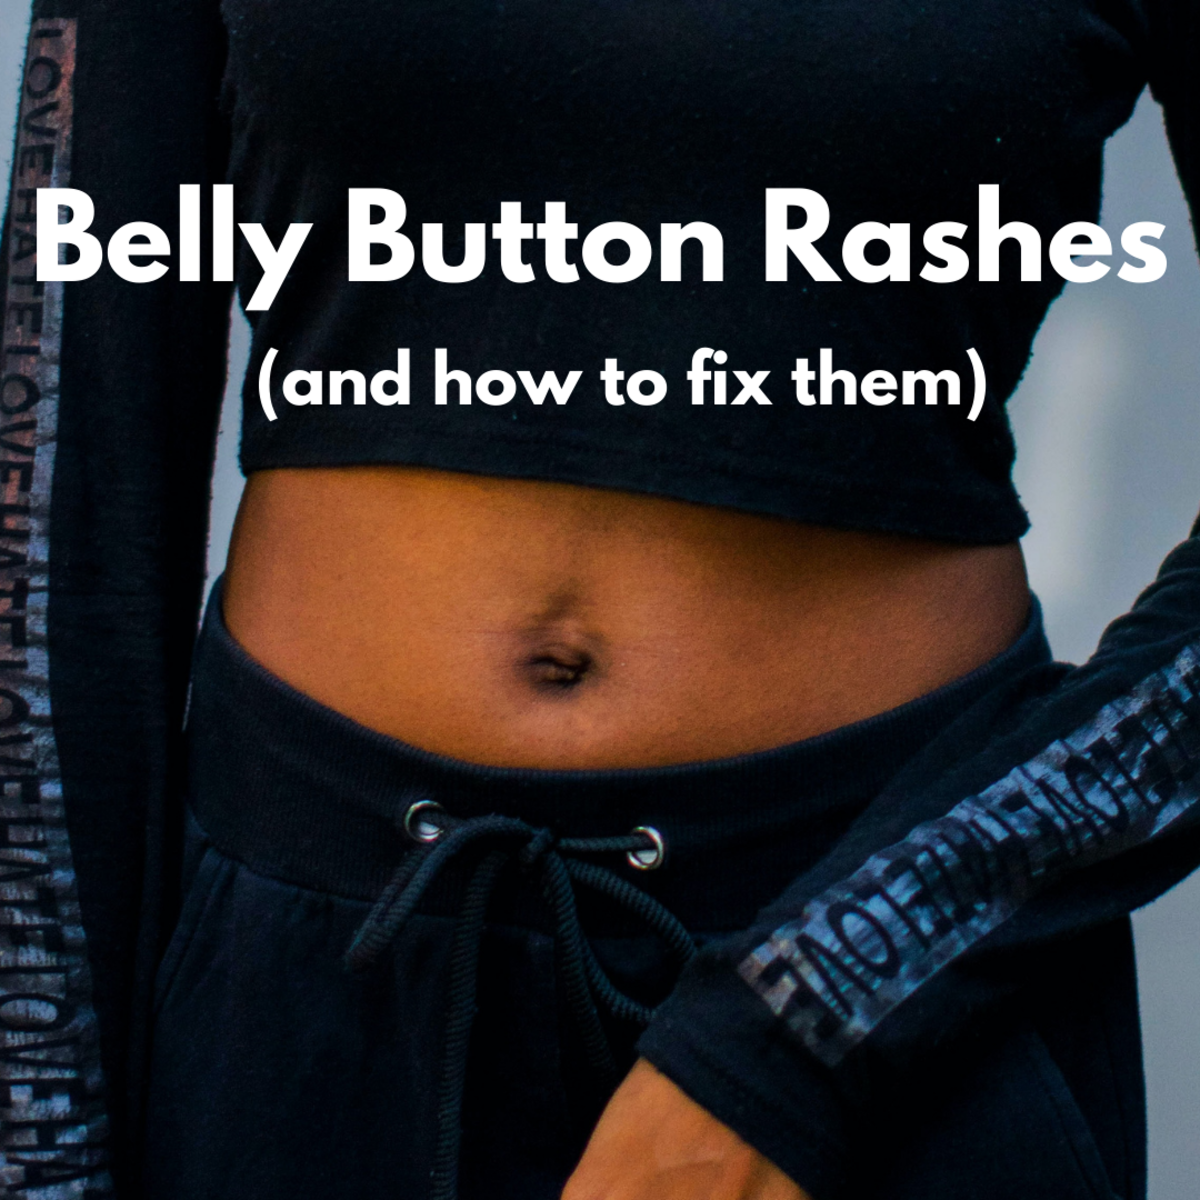 Do you have a belly button rash?